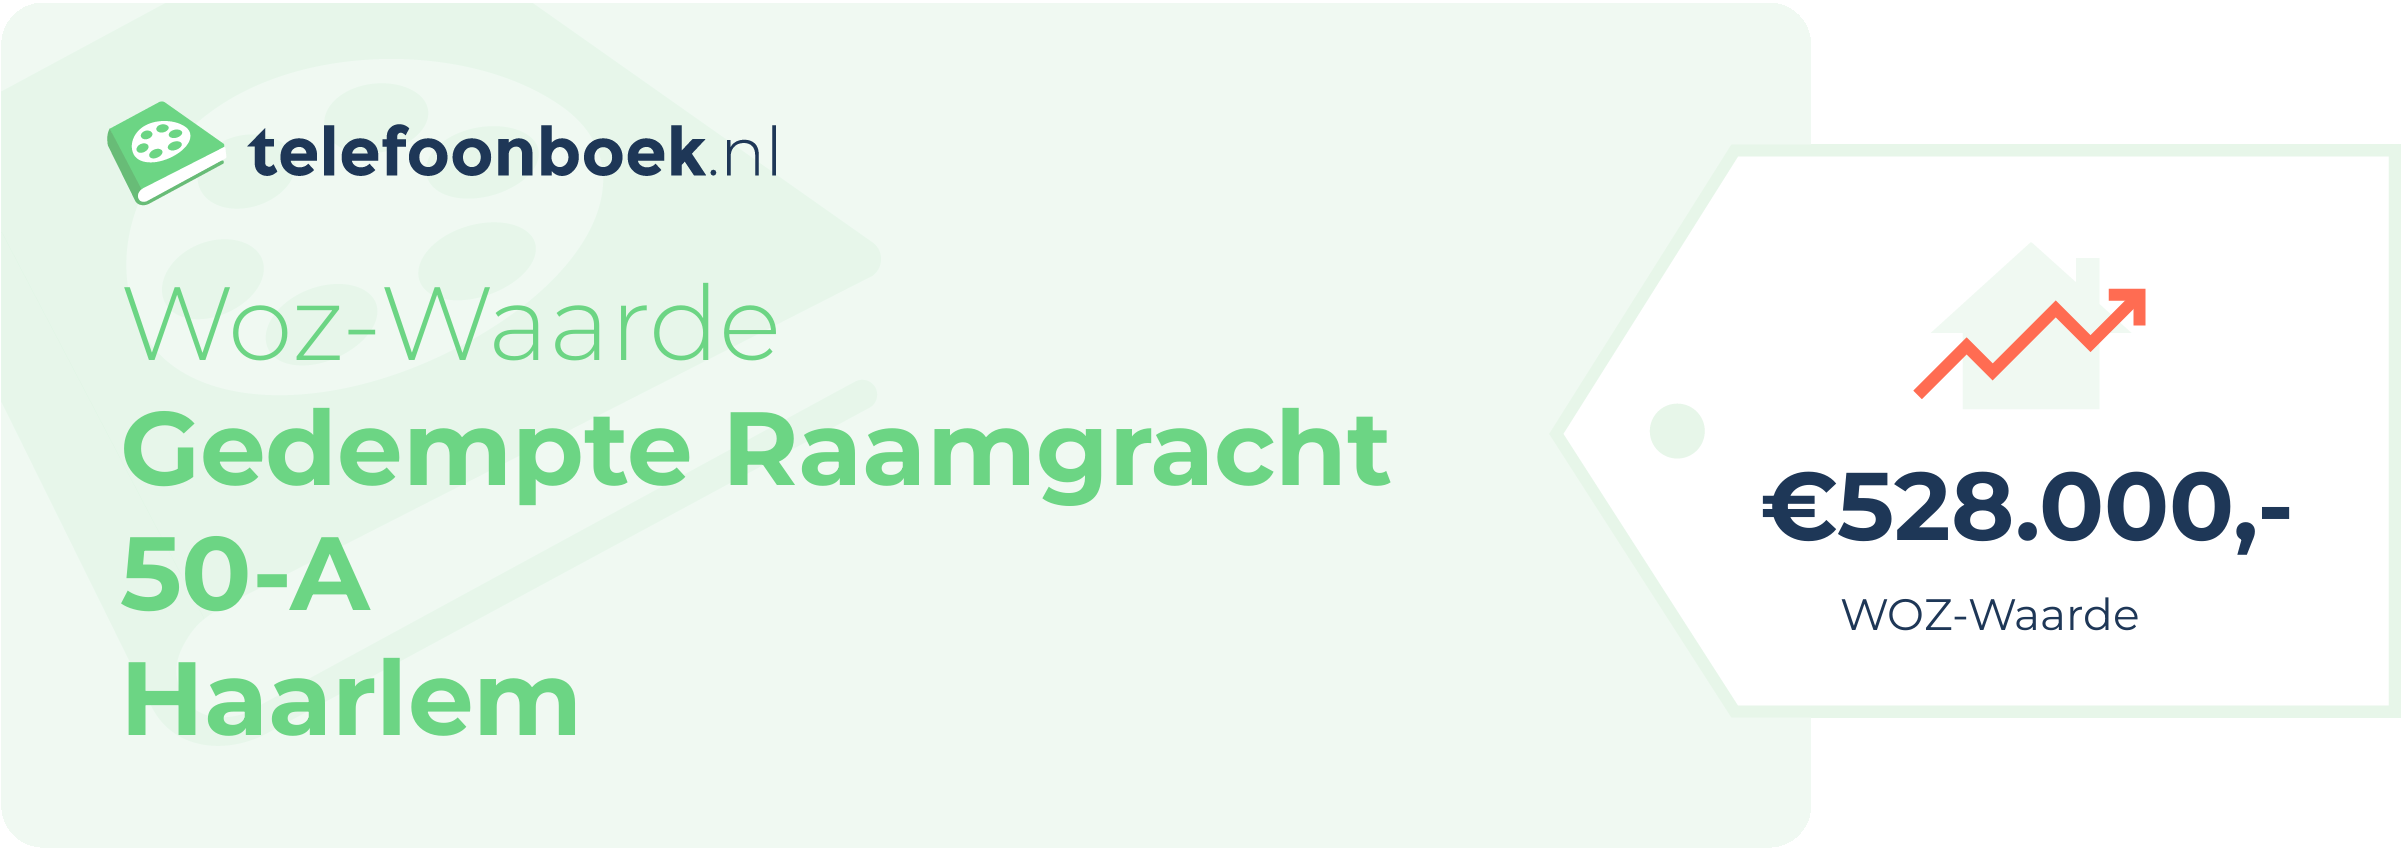 WOZ-waarde Gedempte Raamgracht 50-A Haarlem